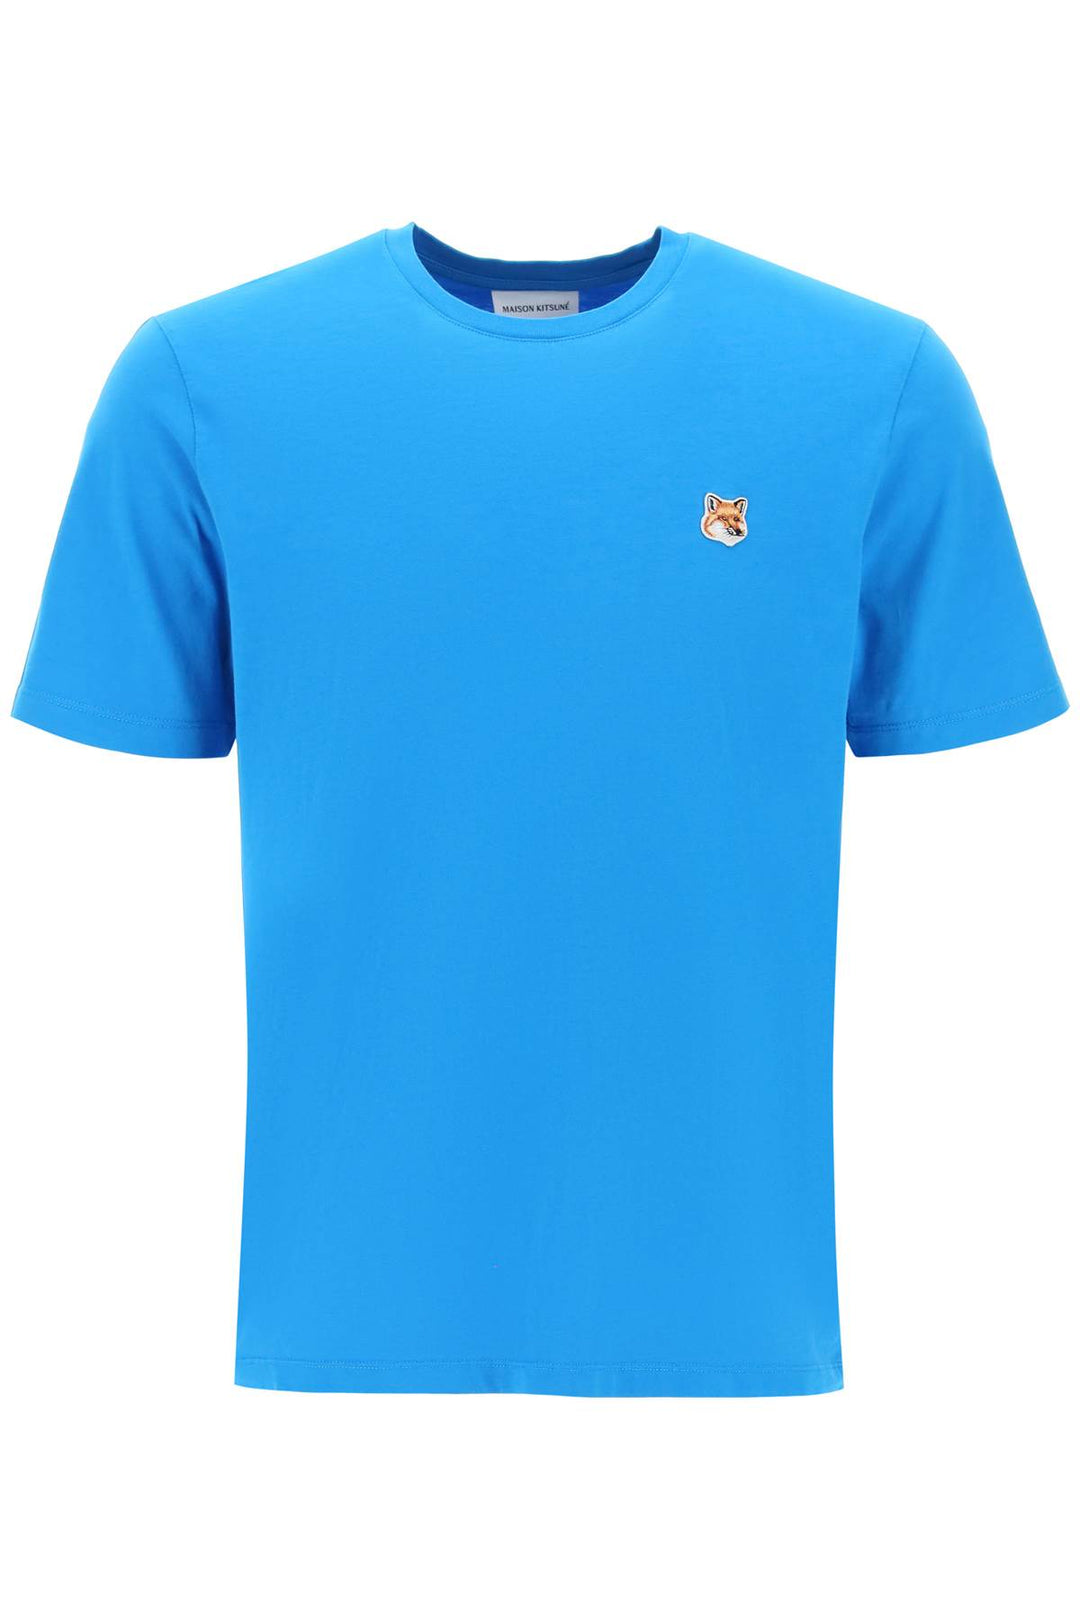 Maison Kitsune Fox Head T Shirt   Blu